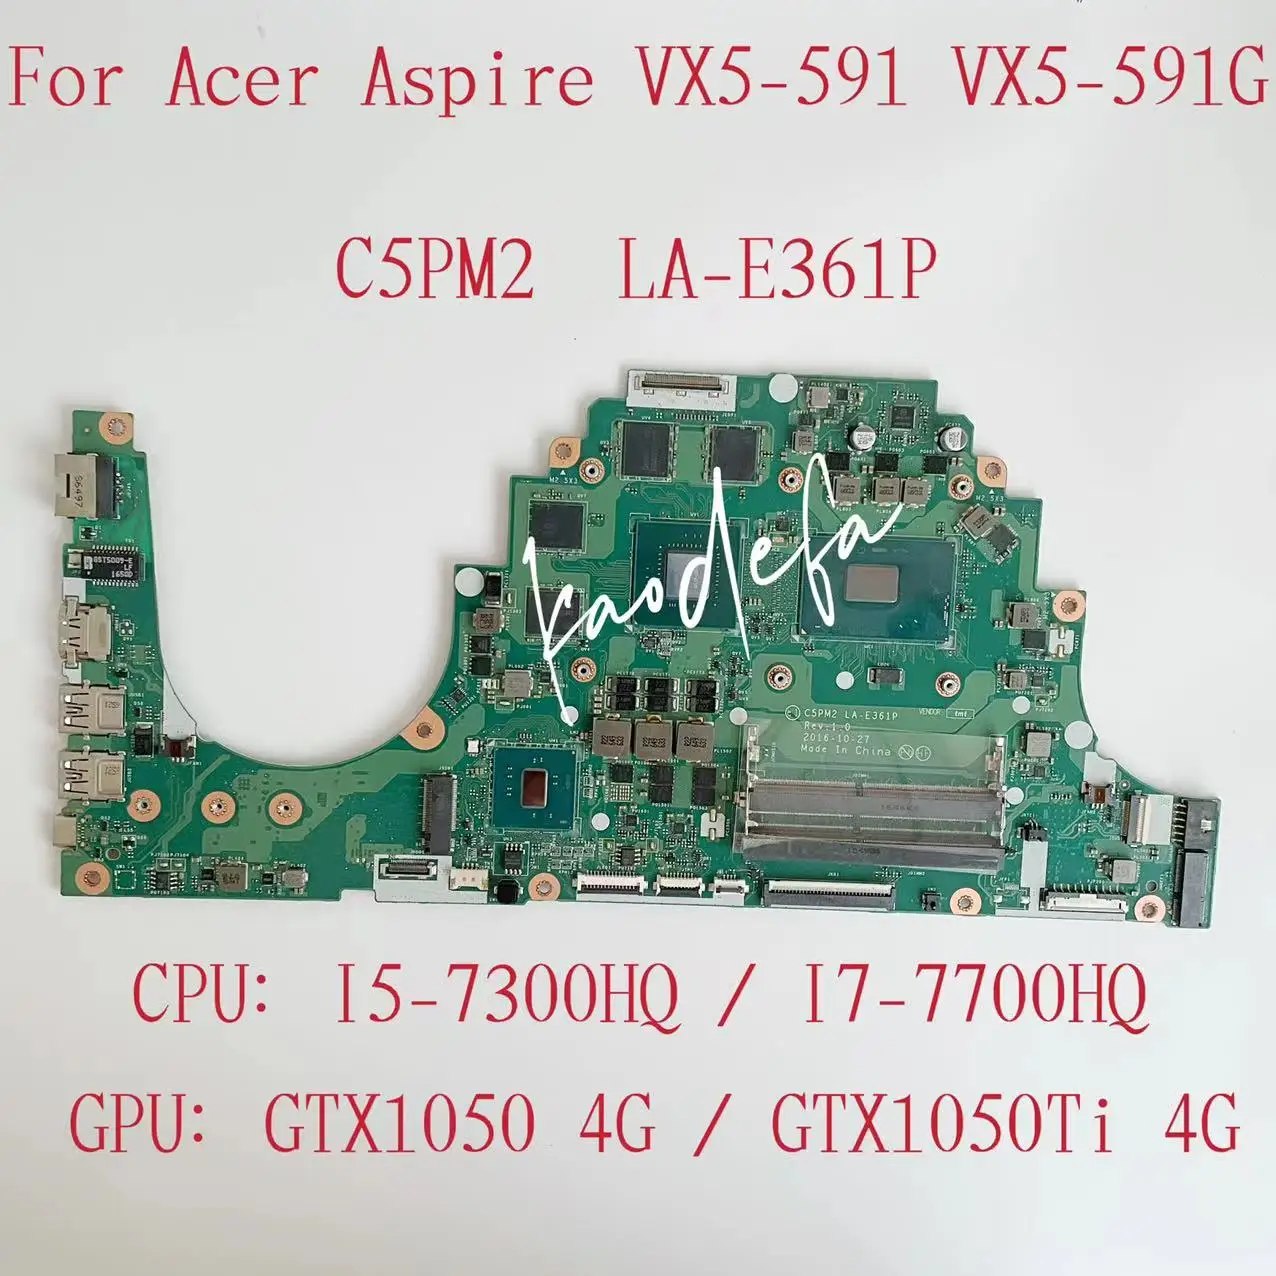 C5PM2 LA-E361P Acer Aspire VX5-591ラップトップマザーボードCPU I5-7300HQ / I7-7700HQ GPU：GTX1050 / 1050TI 4GテストOK